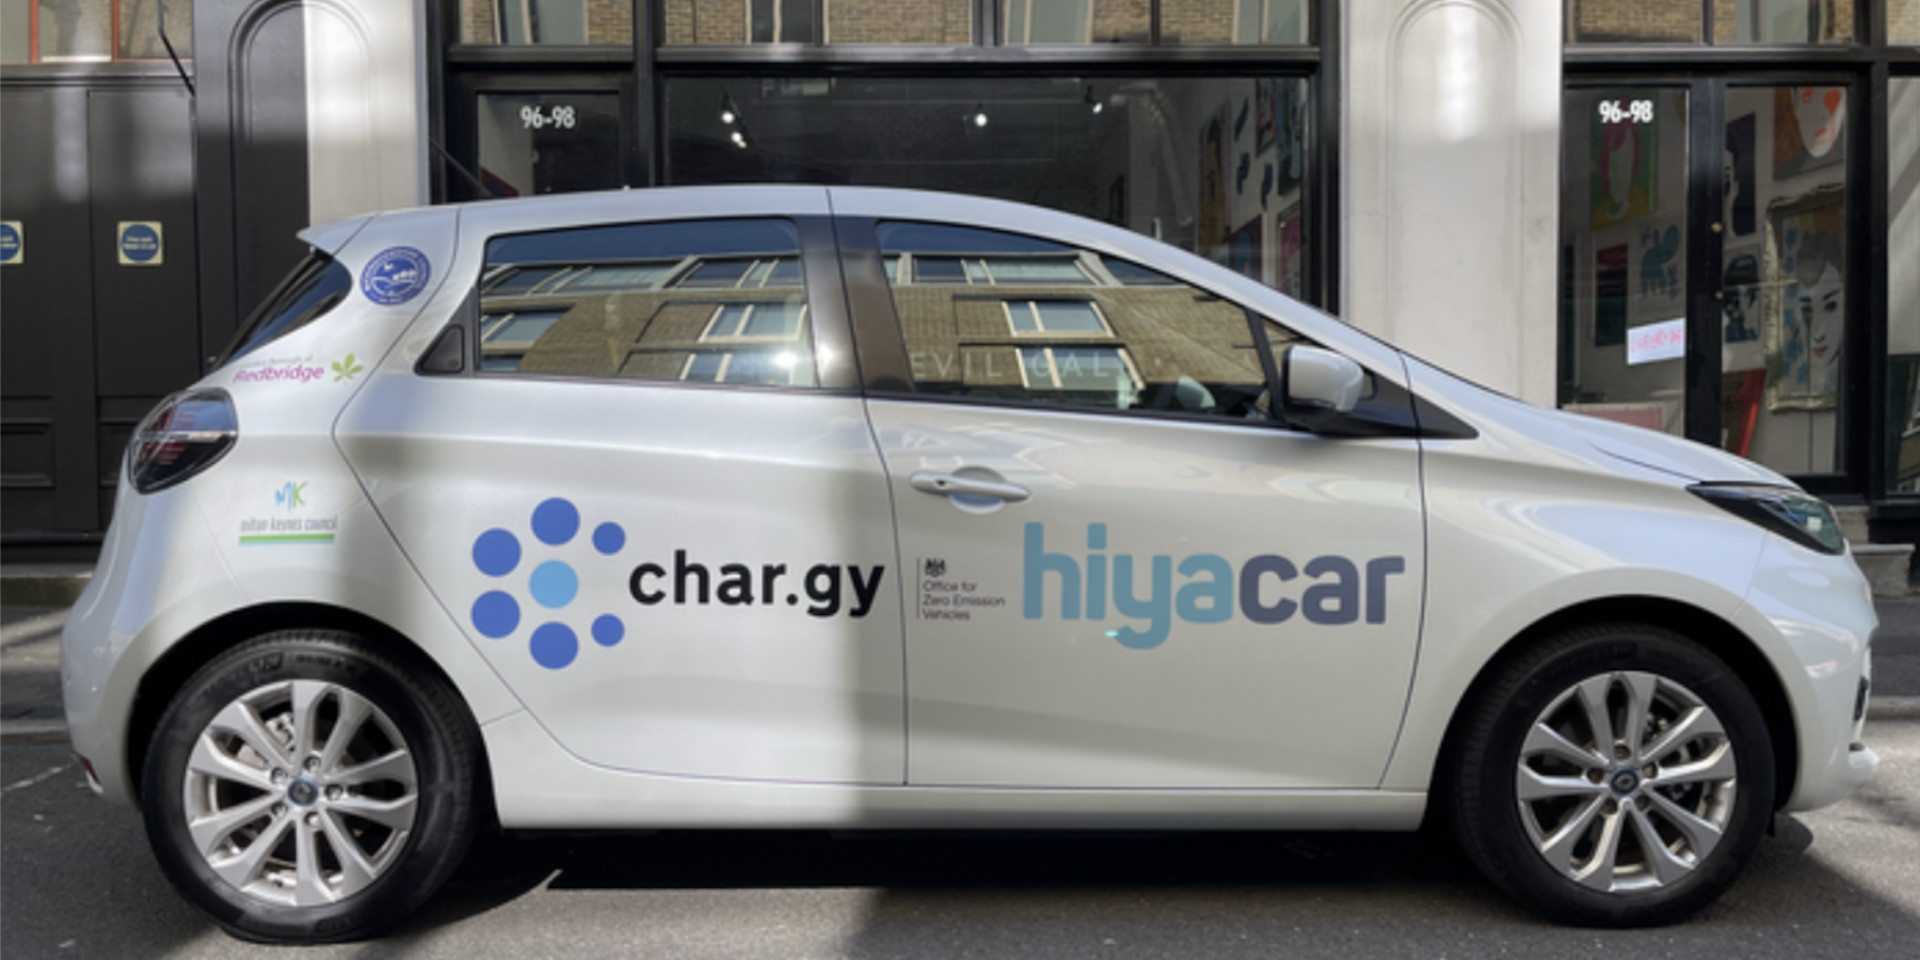 Char.gy - Hiyacar Wireless charging car